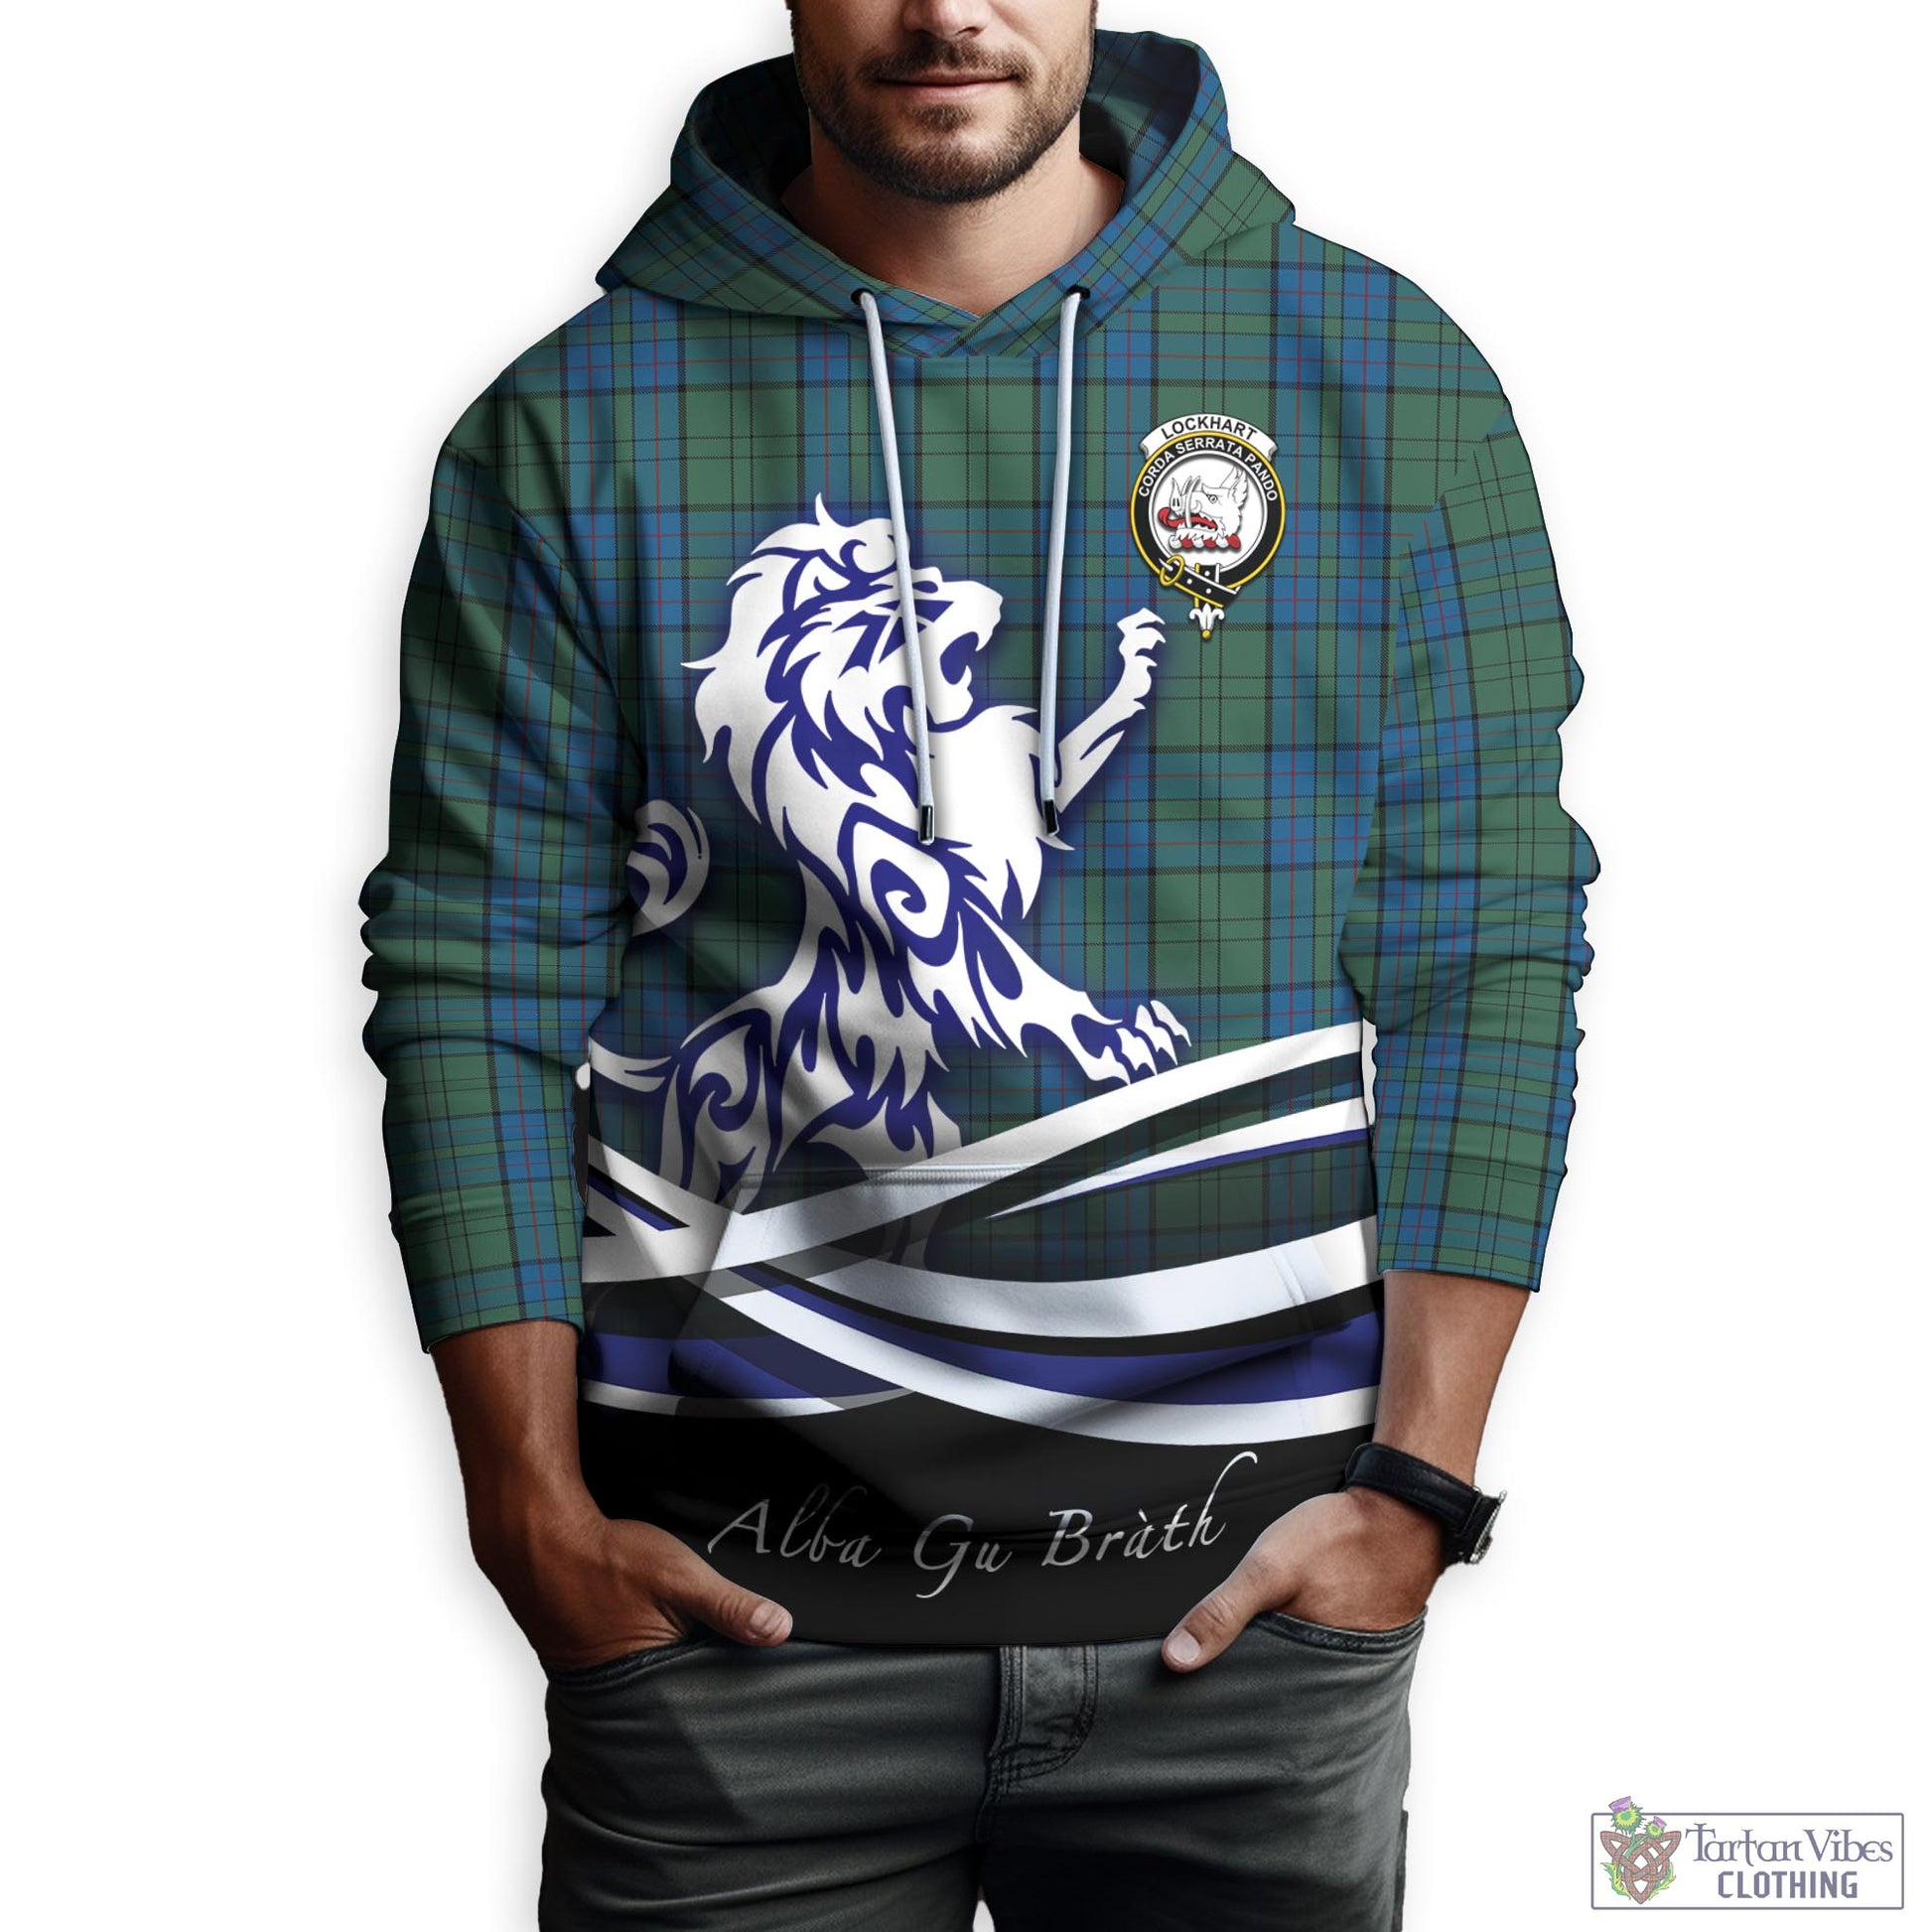 lockhart-tartan-hoodie-with-alba-gu-brath-regal-lion-emblem